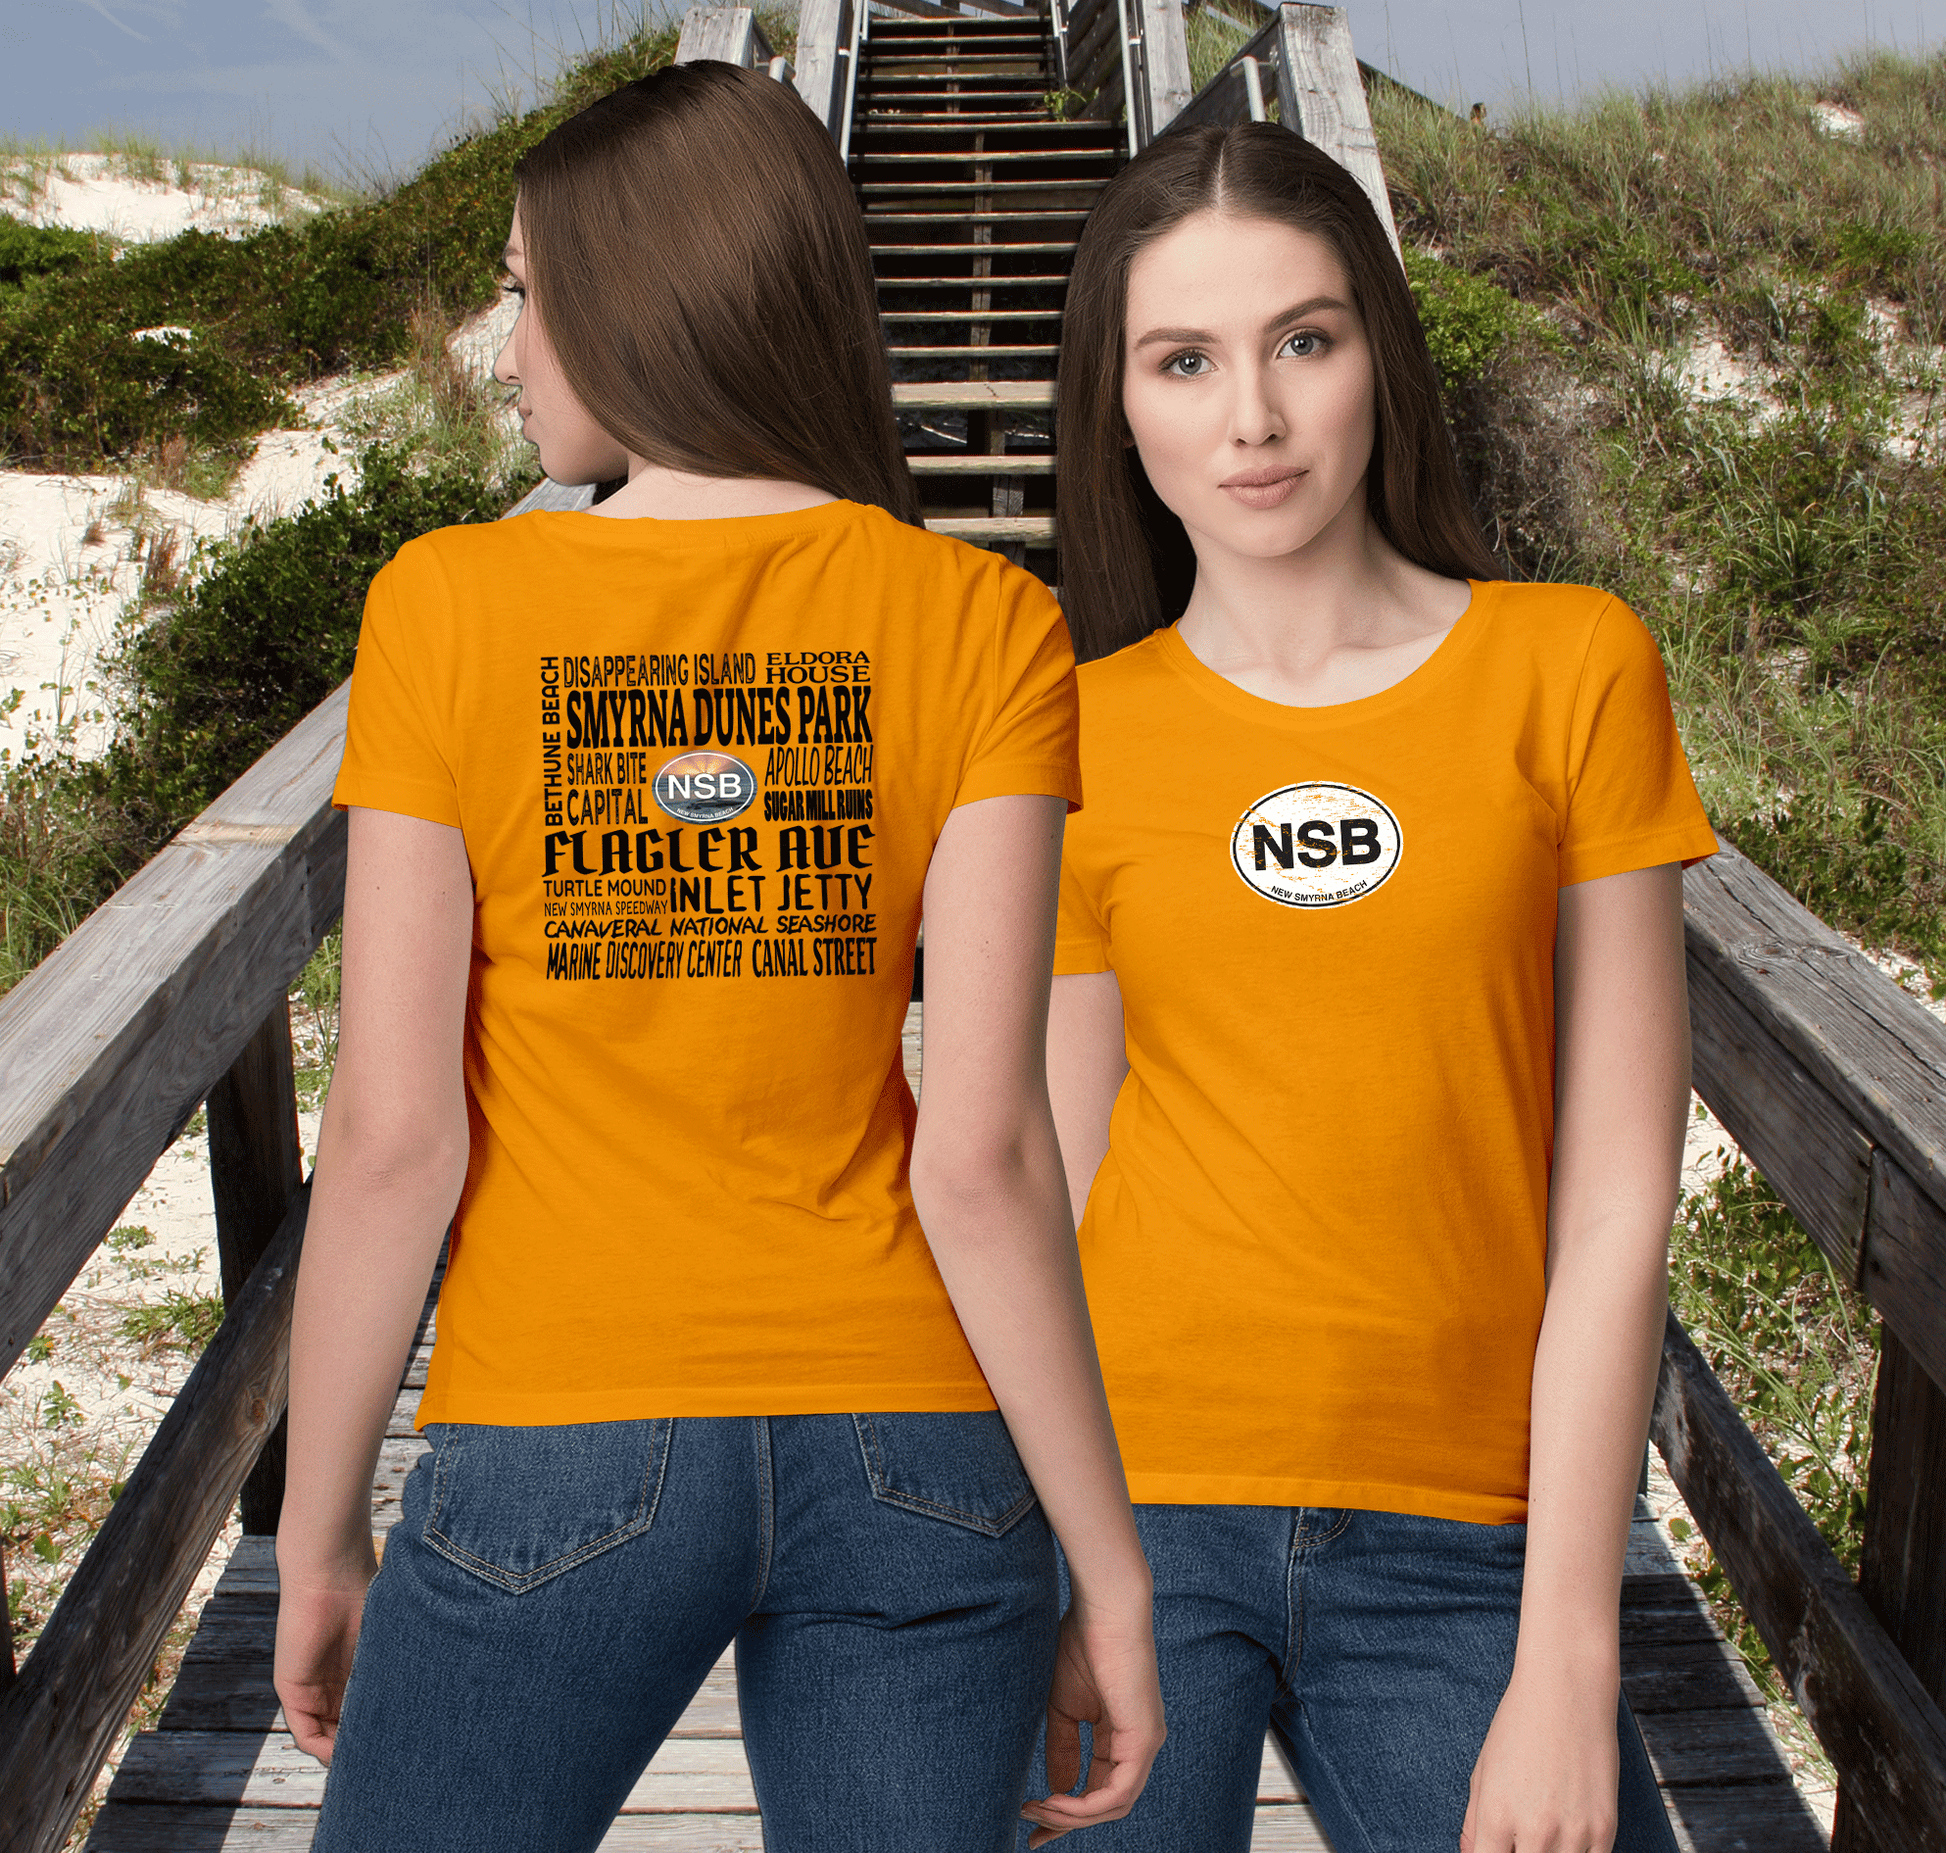 New Smyrna Beach Women's Destinations T-Shirt Souvenir - My Destination Location